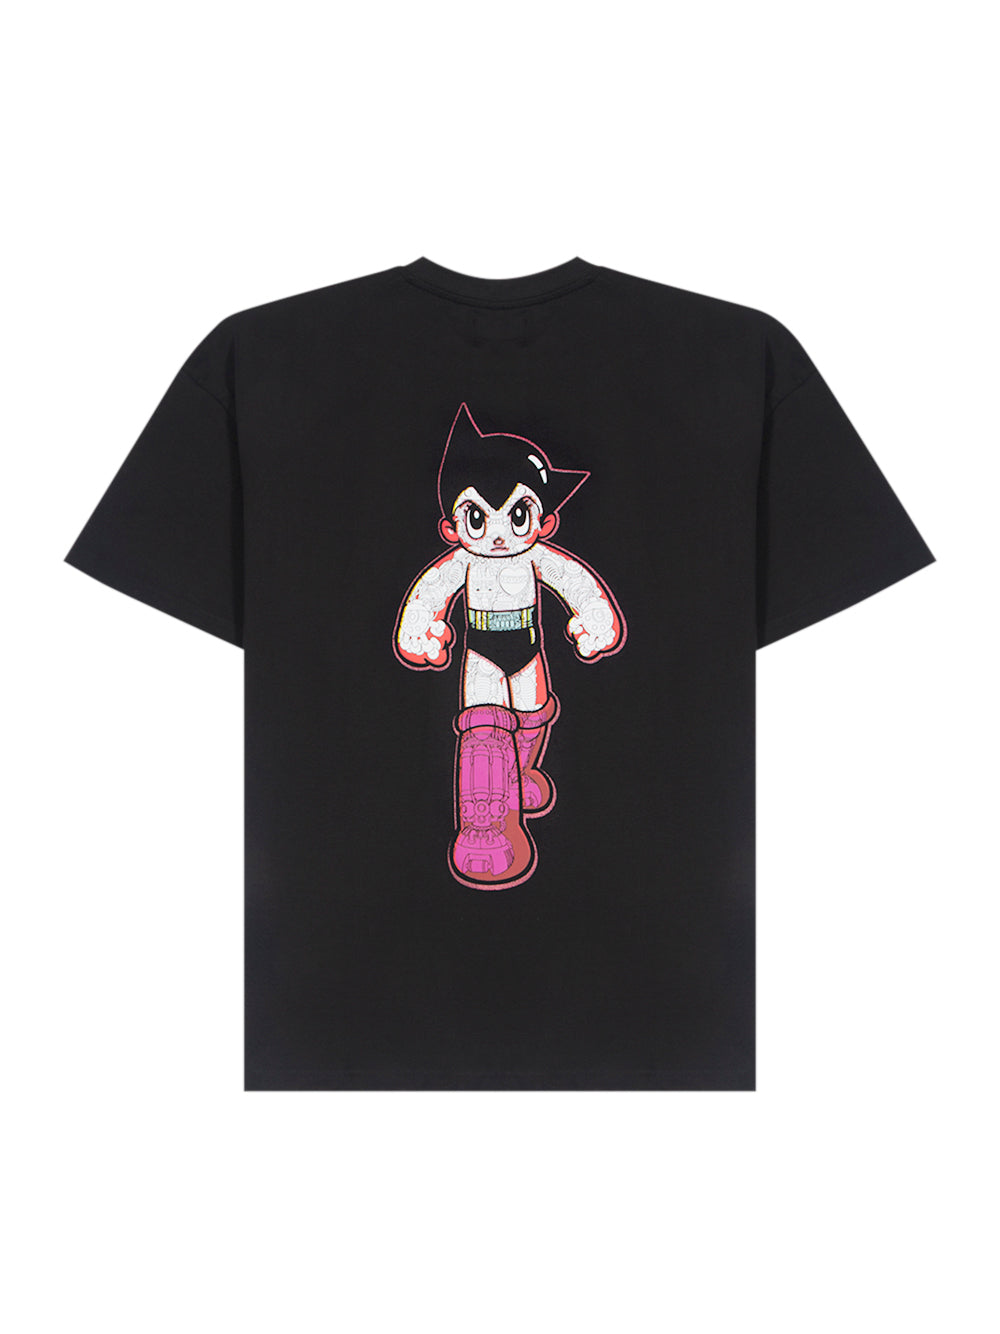 T-Shirt Astro Boy Pink Boots (Black)